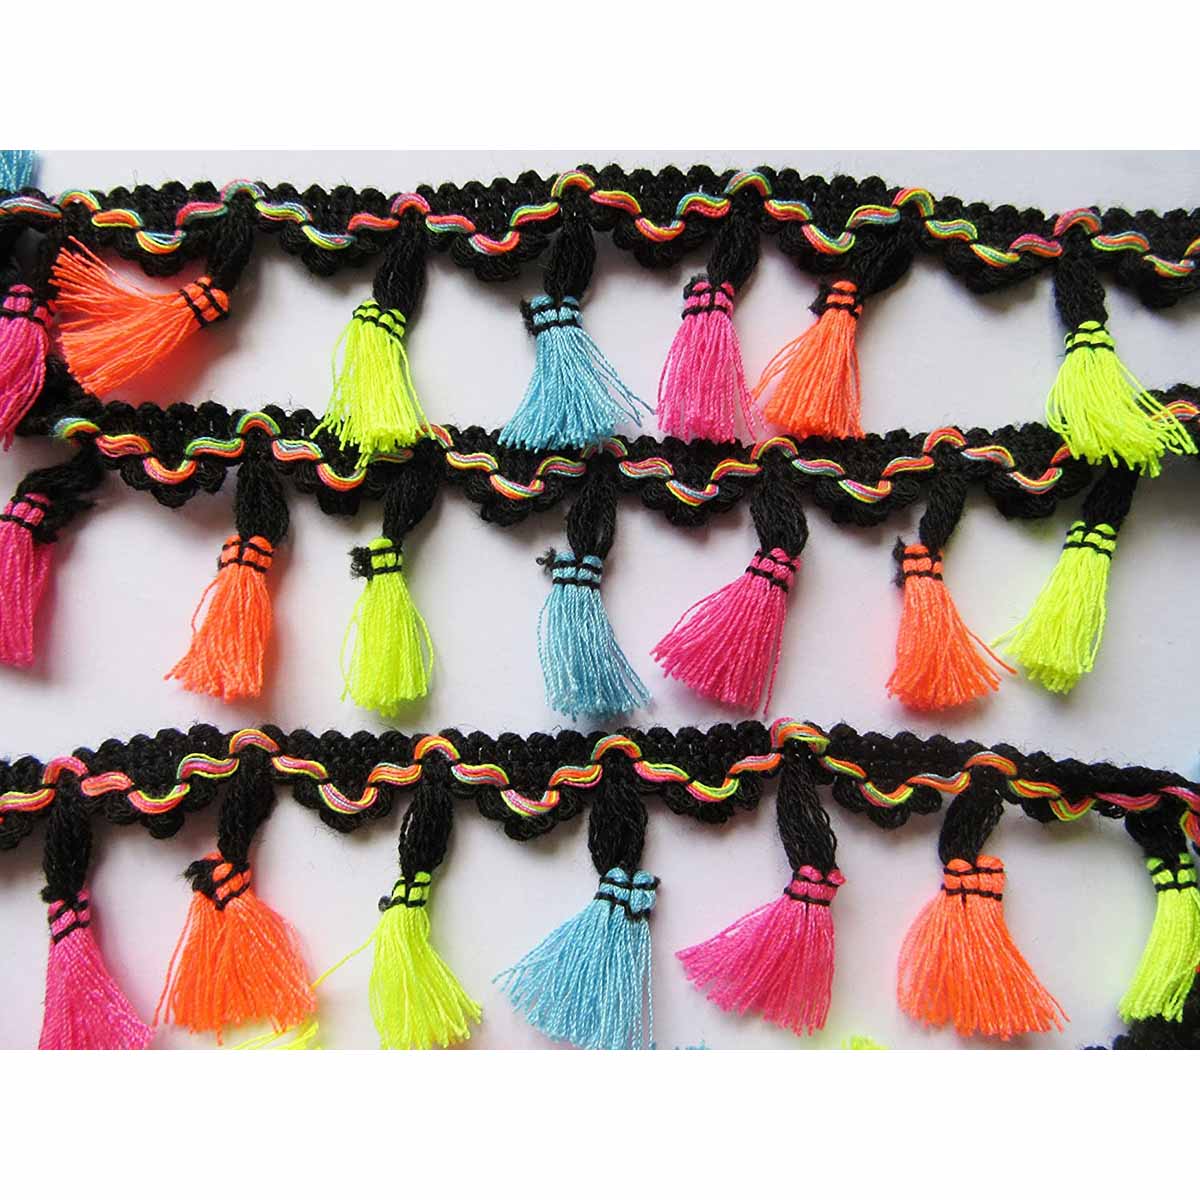 6 Yards Tassel Trim Cotton Fabric Ribbon Fringe-Black Rainbow